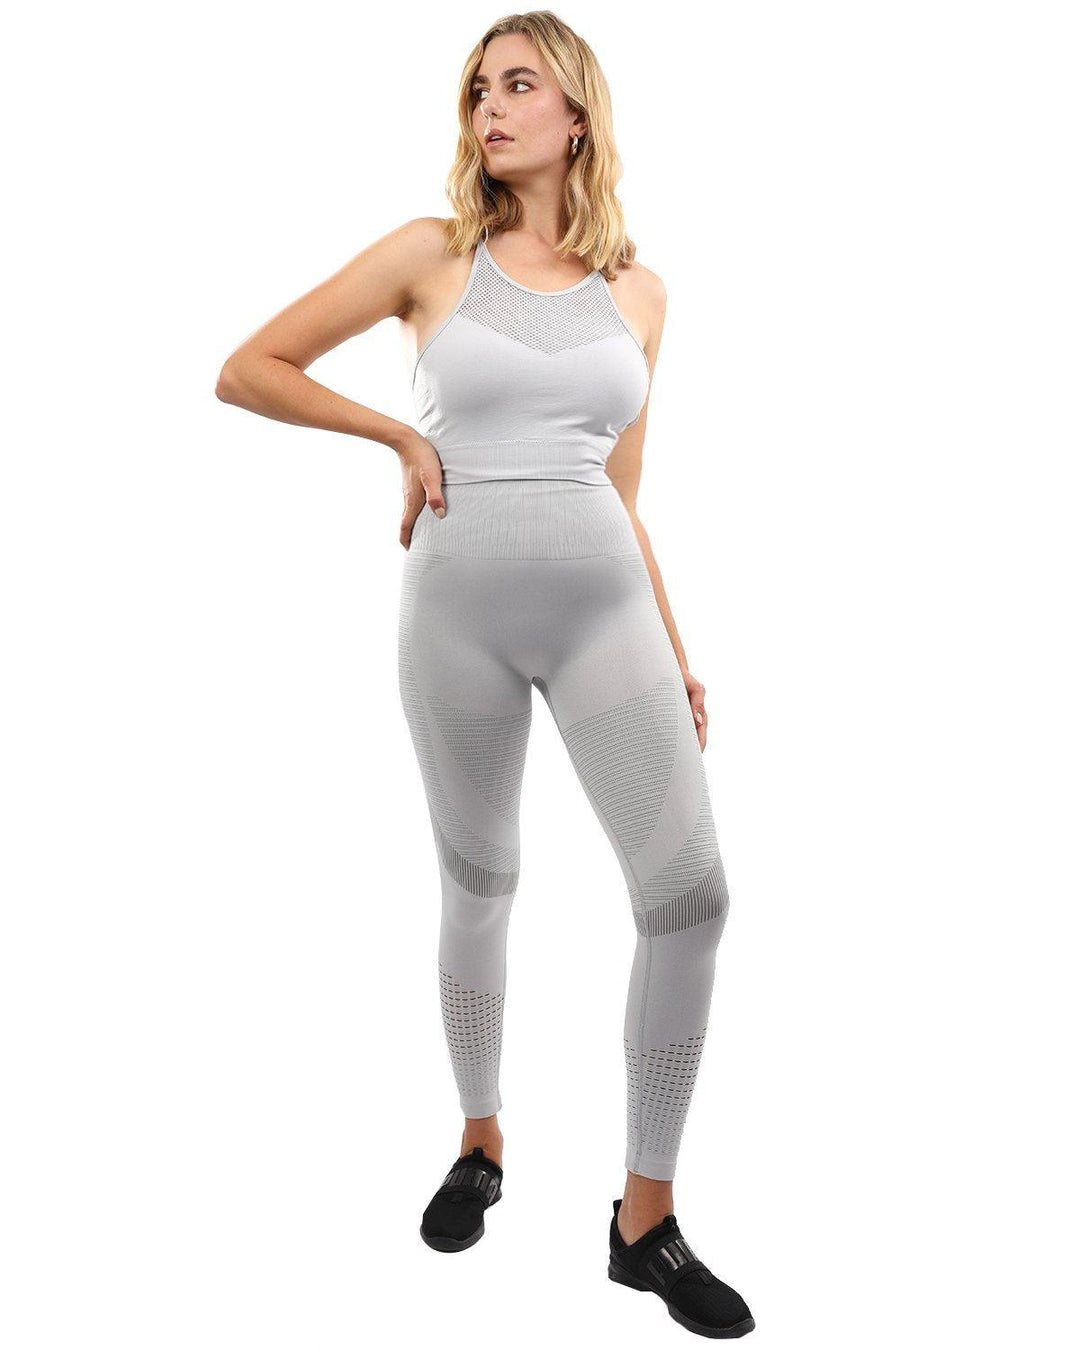 Helia Seamless Leggings & Sports Bra Set - Grey - Brand My Case